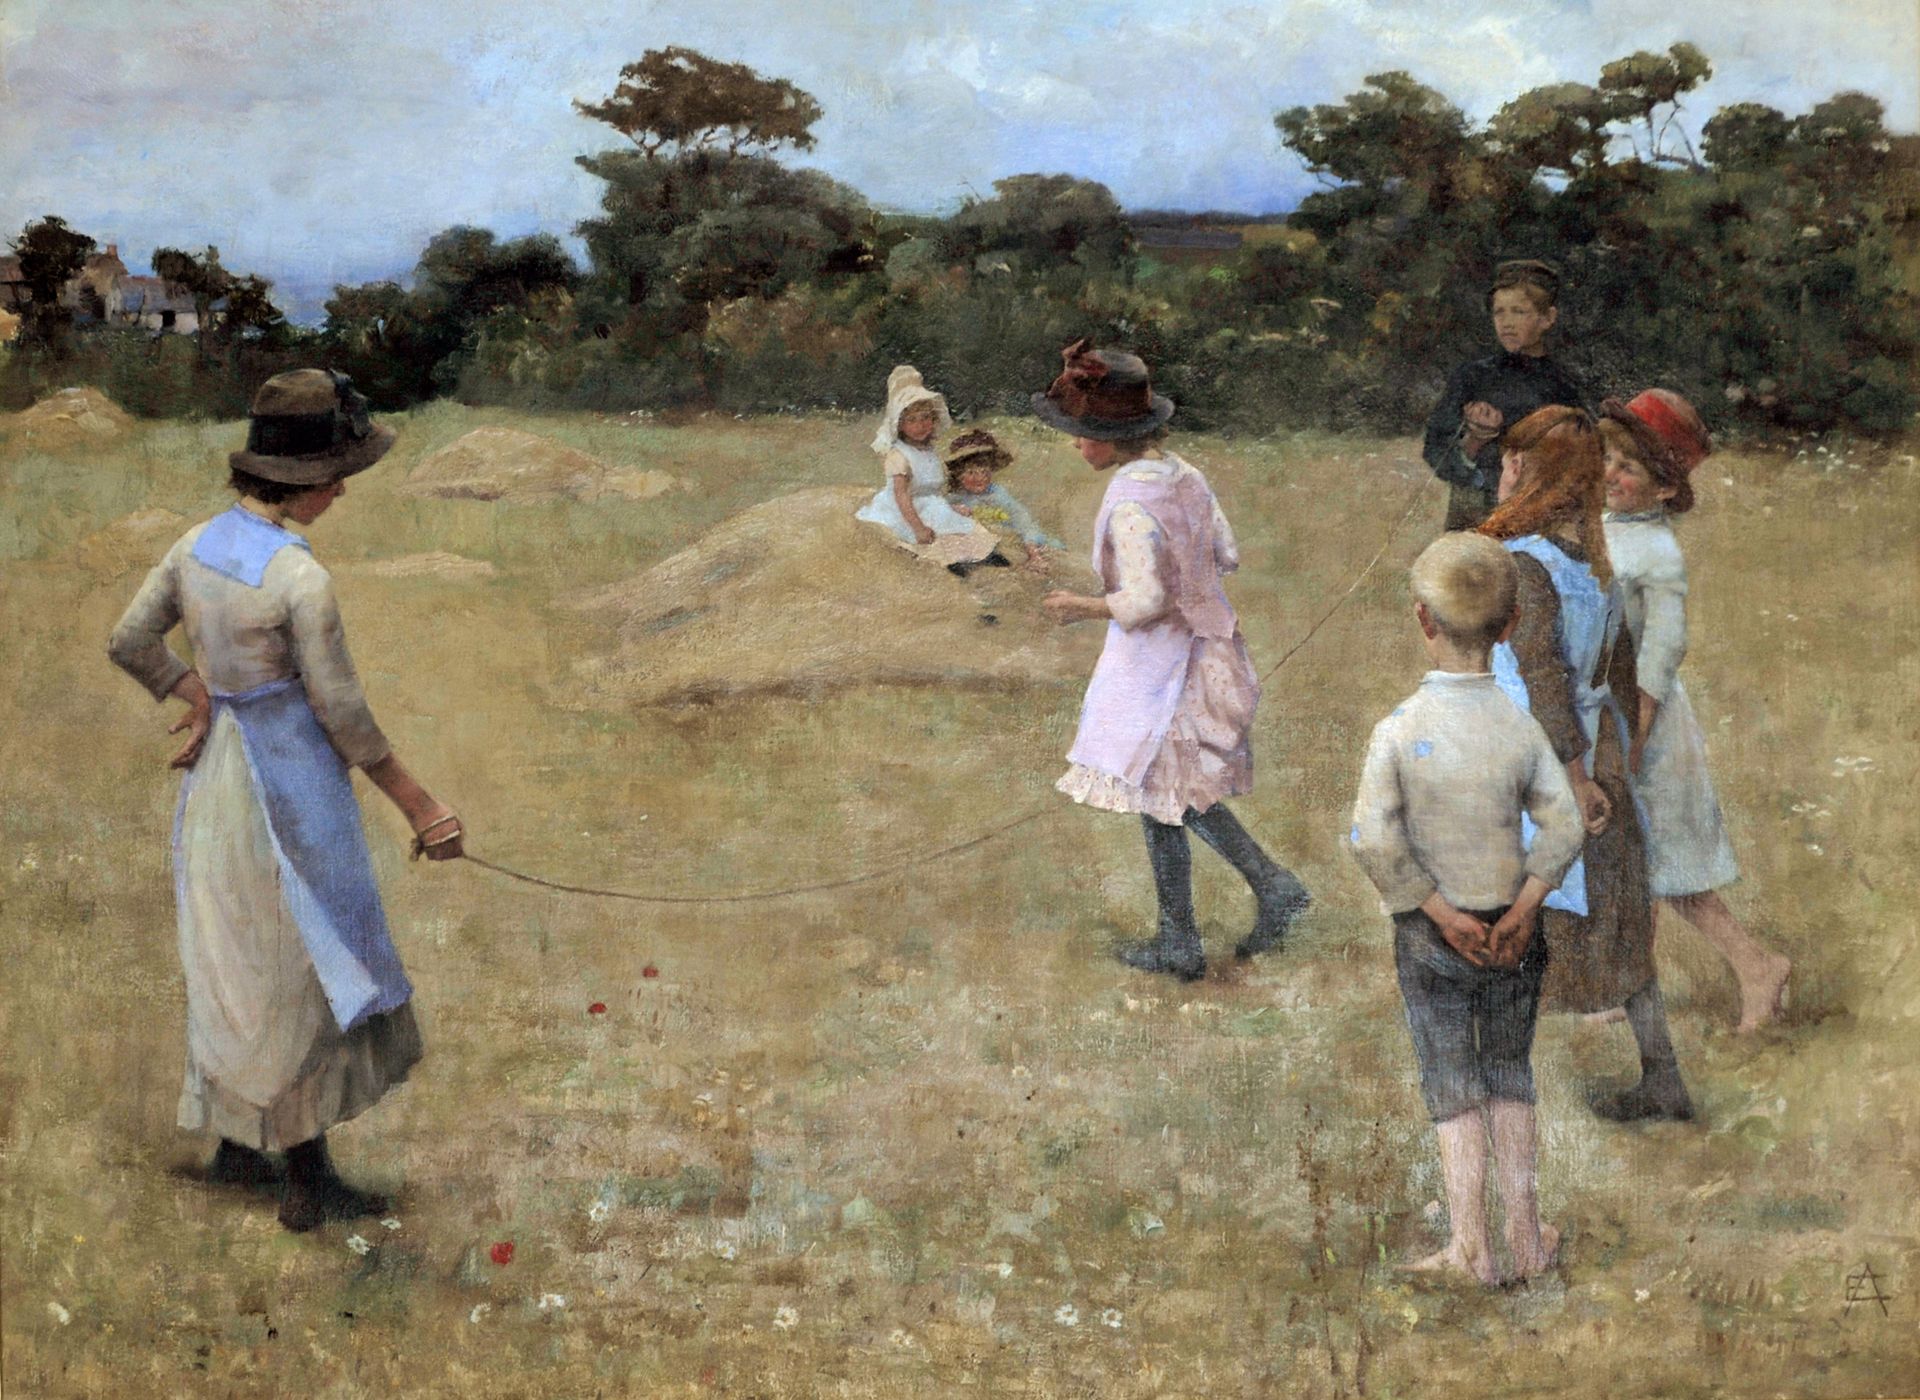 STANHOPE FORBES Elizabeth Adela (1859-1912) 
伊丽莎白-阿德拉-斯坦霍普-福布斯的布面油画纪念品 "玩跳绳的孩子"。&hellip;